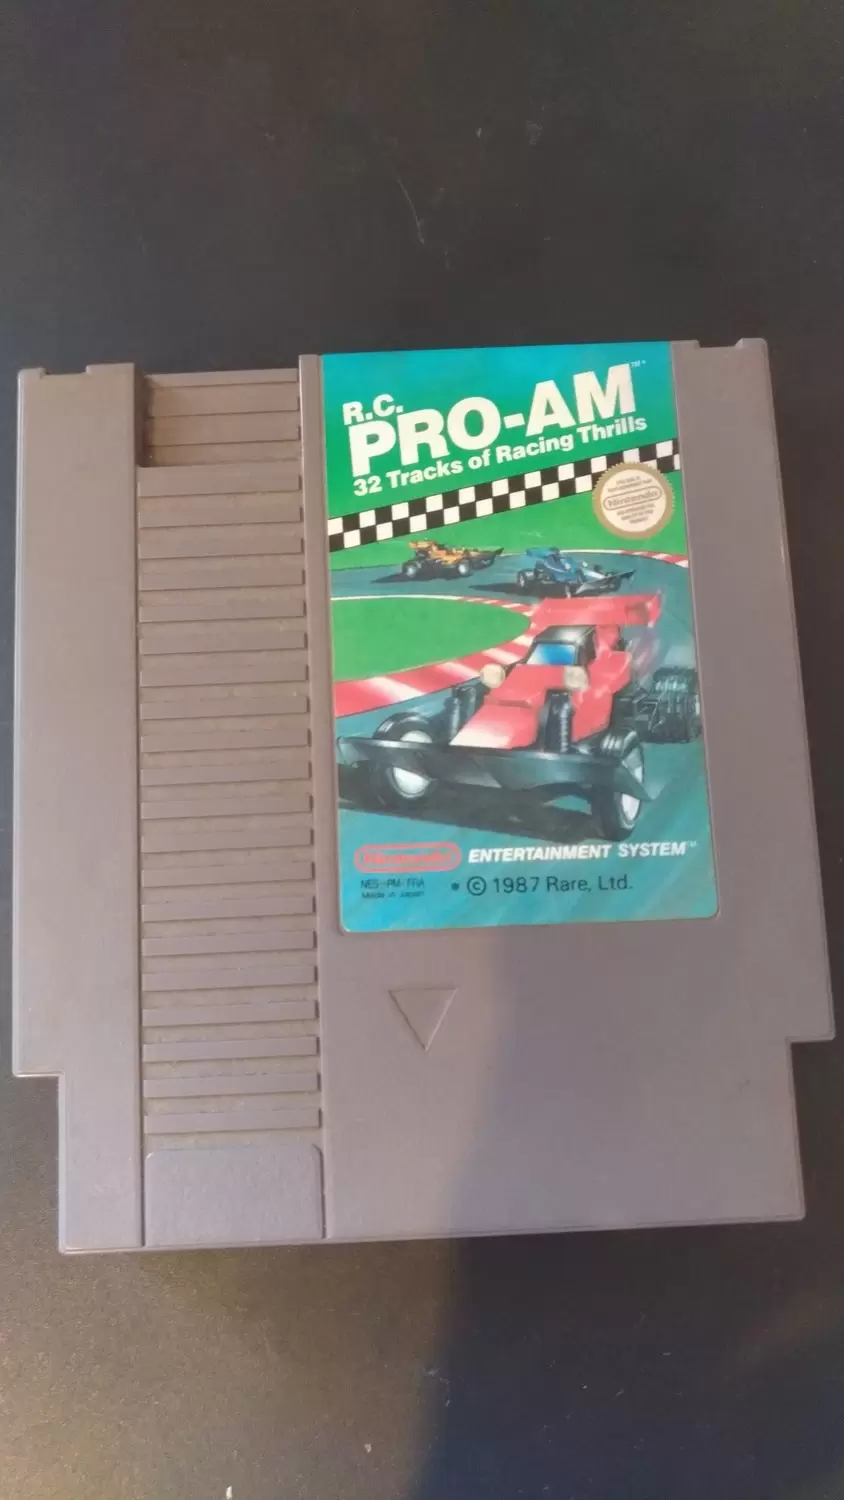 Nintendo NES - RC Pro Am 32 Tracks of racing Thrills